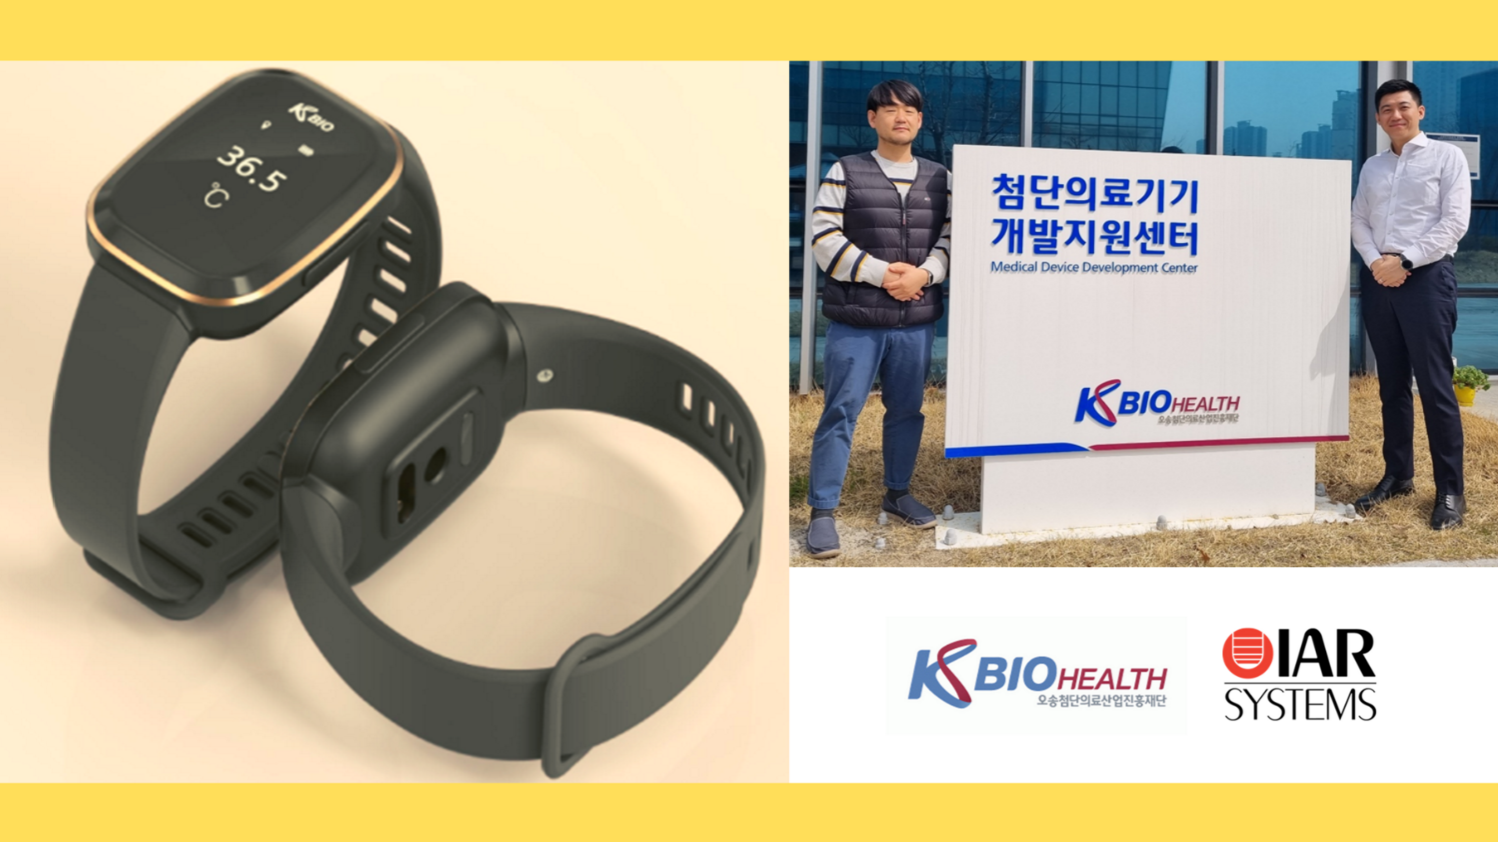 IAR Systems 助力韓國 Osong Medical Innovation Foundation（KBIO Health）開發先進醫療設備